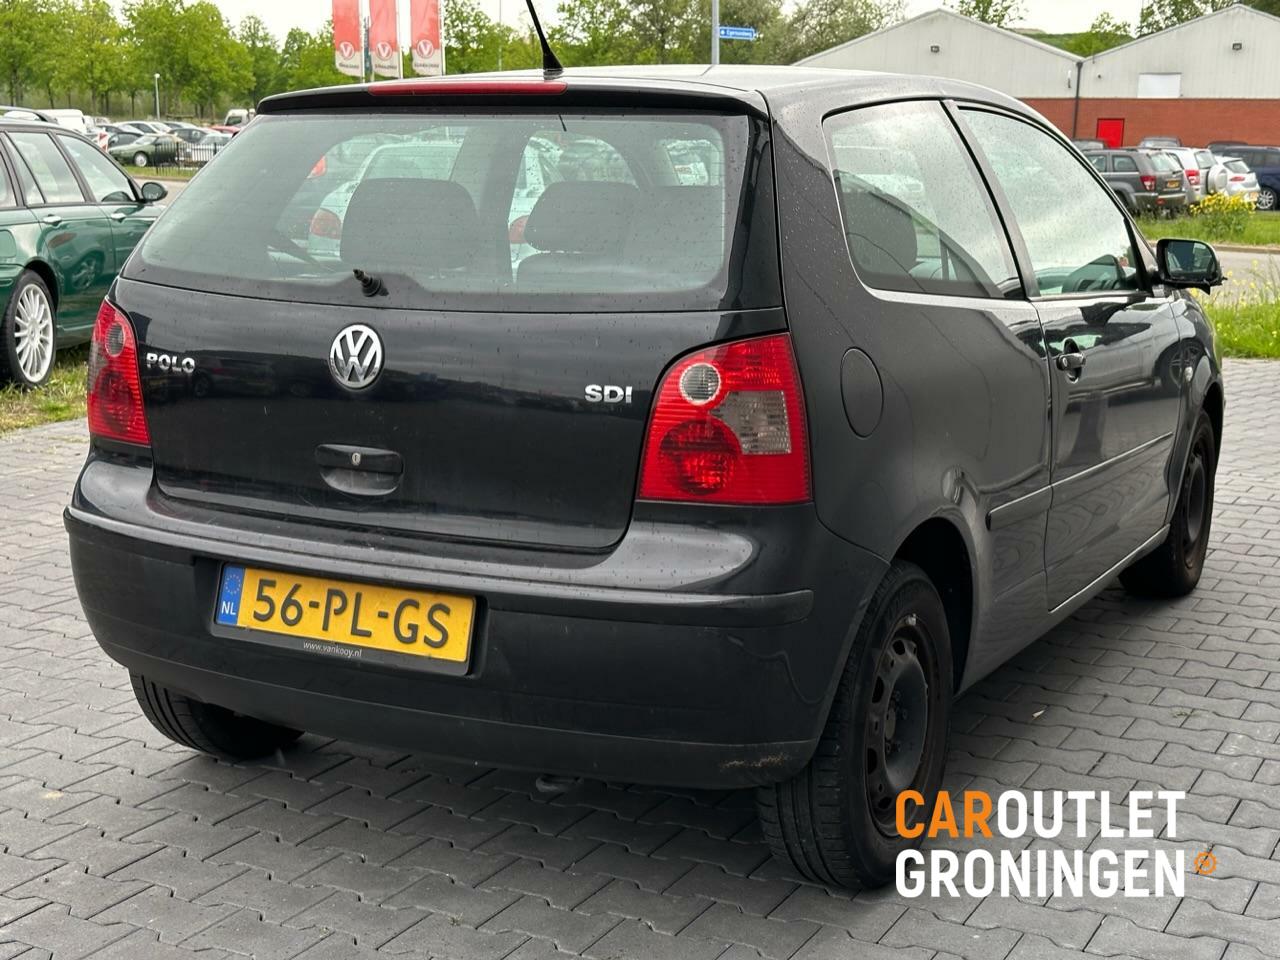 Caroutlet Groningen - Volkswagen Polo 1.9 SDI | AIRCO | APK 09-2023 | INRUILKOOPJE